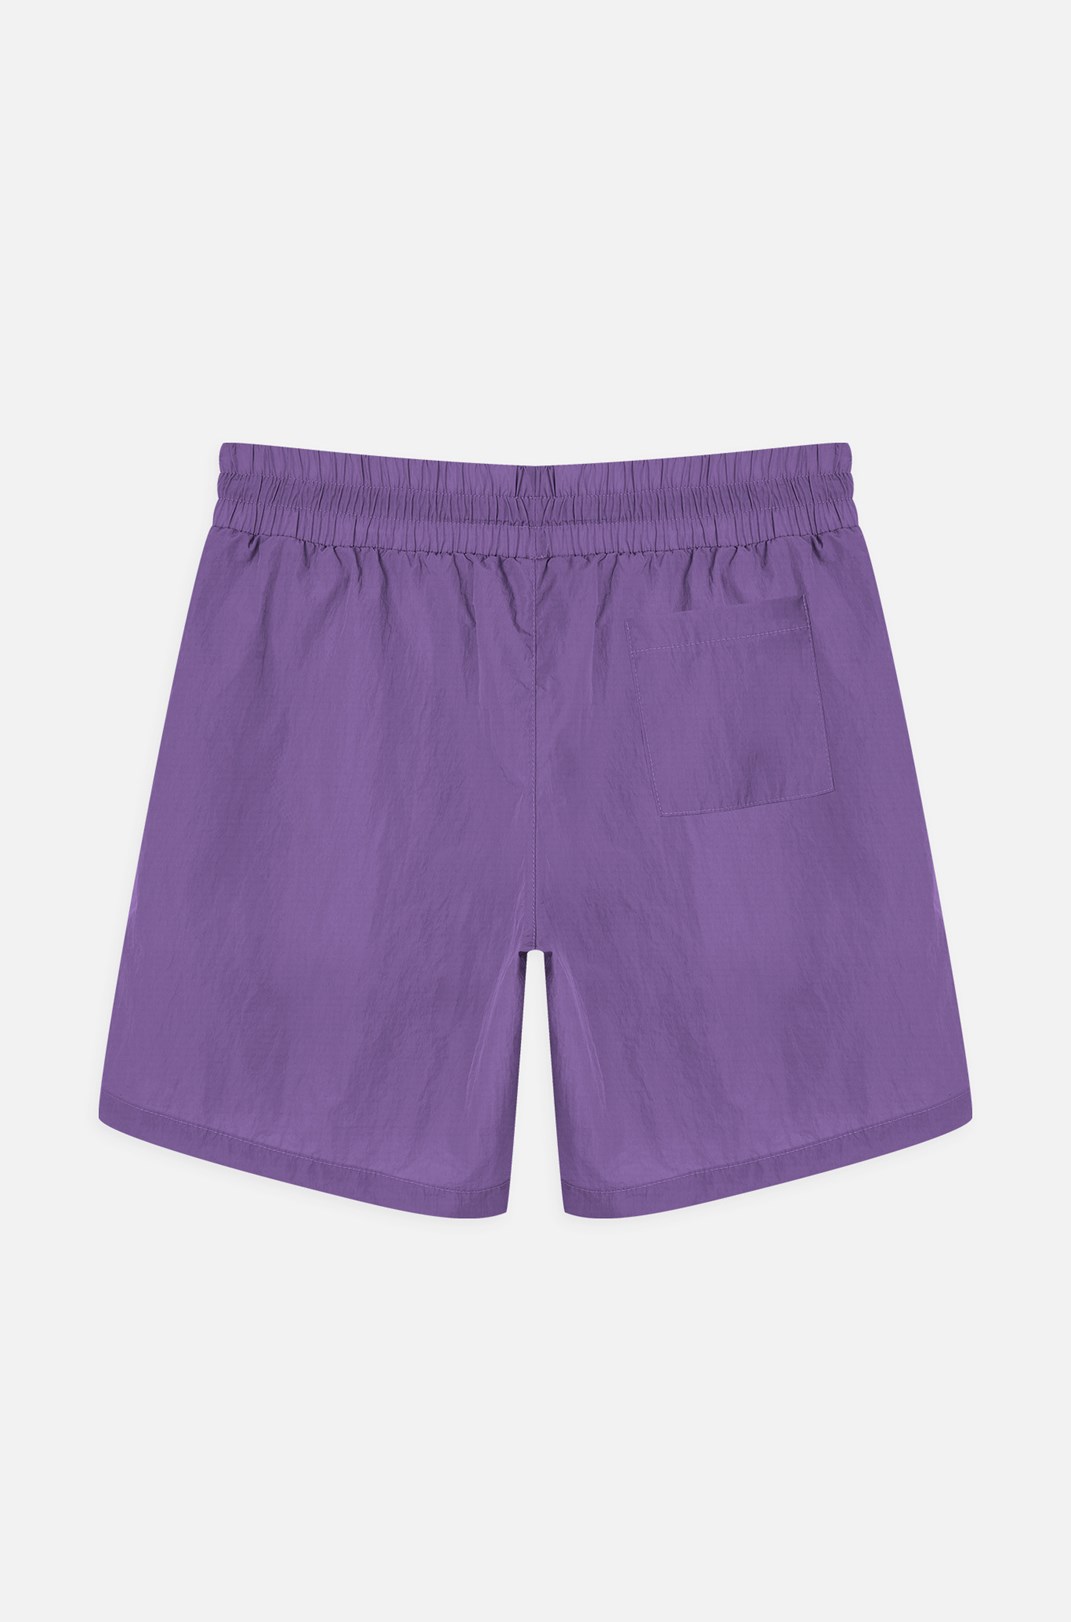 Shorts Approve Basic Lilás